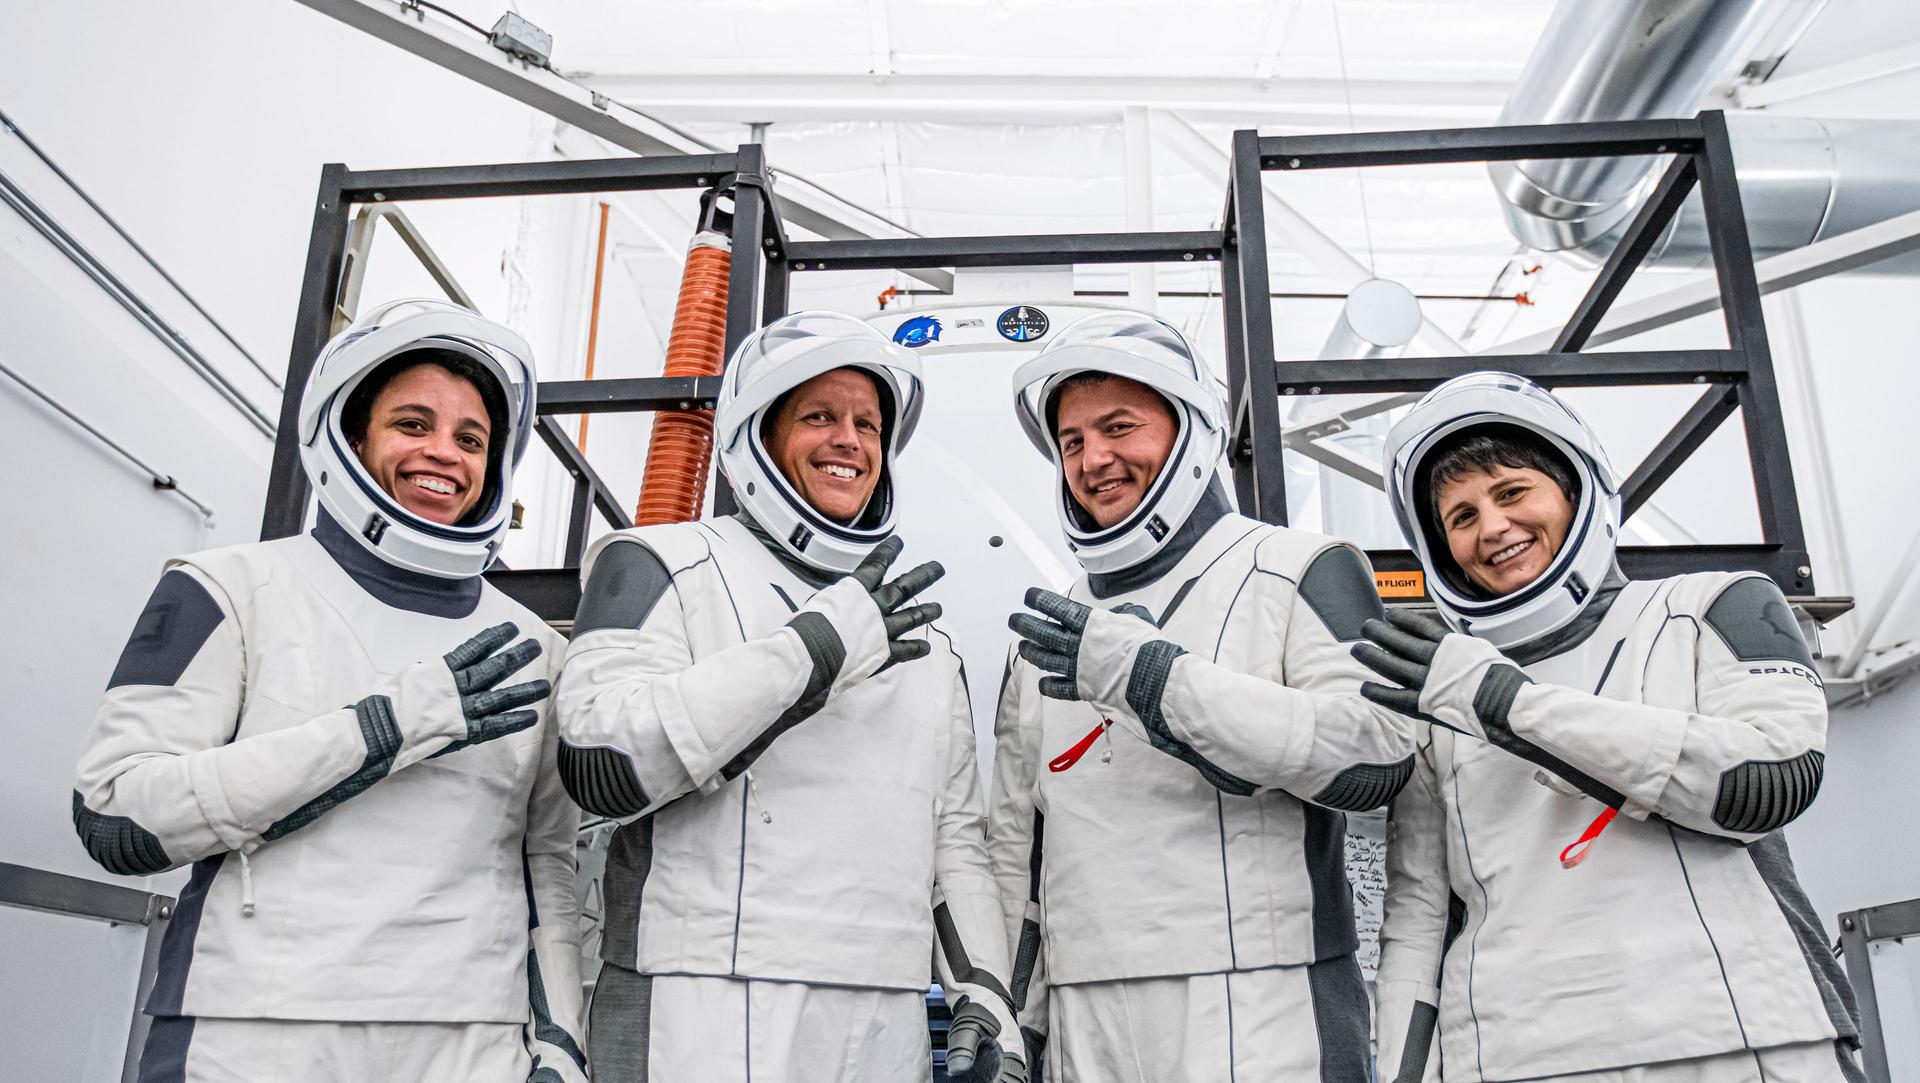 The astronauts of Nasa’s Crew-4 mission to the ISS, Jessica Watkins, Robert hines, Kjell Lindgren and ESA astronaut Samantha Cristoforetti